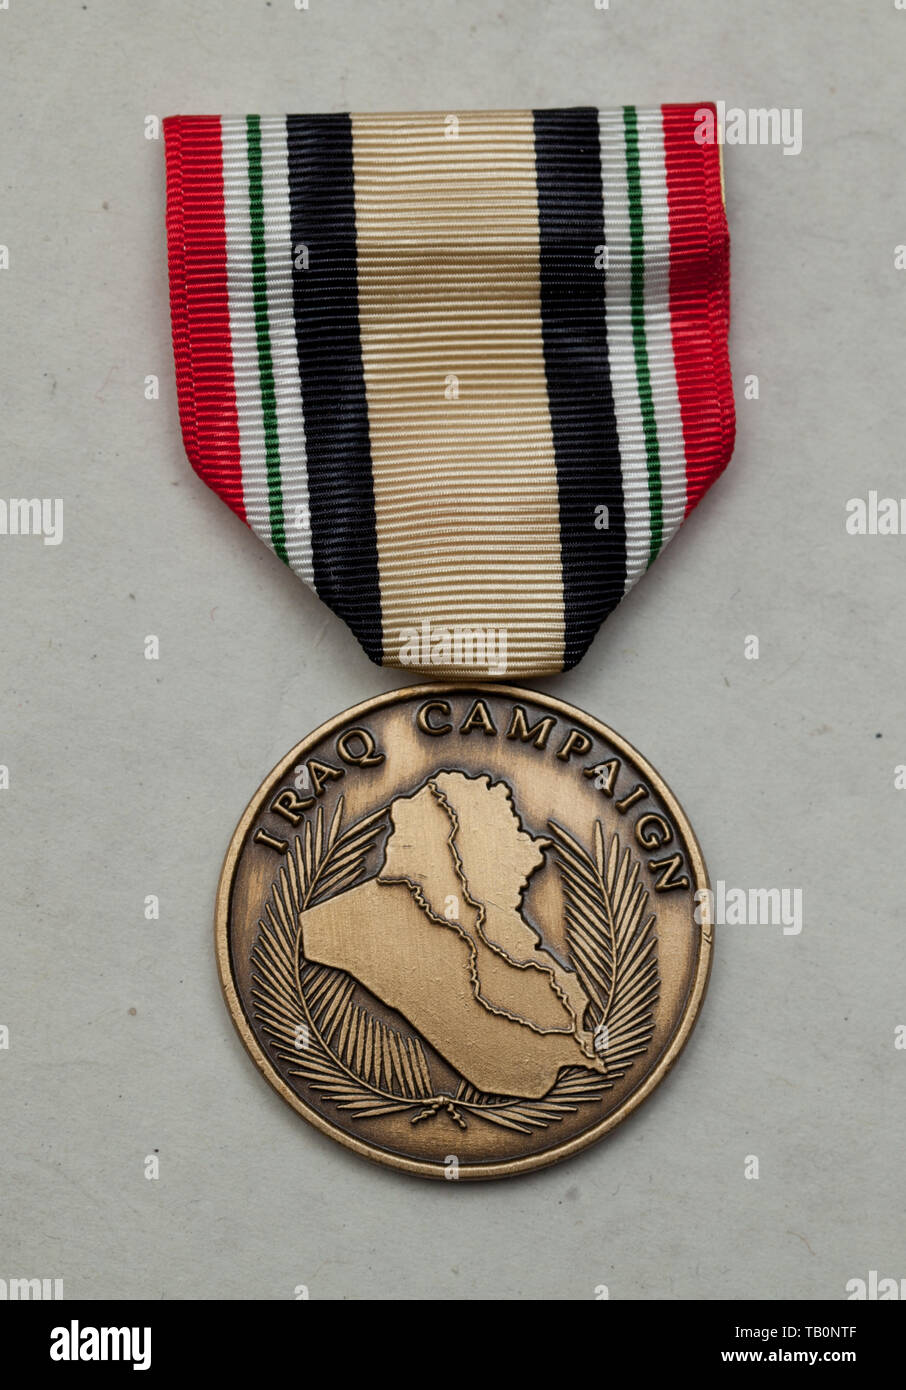 Operation Iraqi Freedom Medaille Stockfoto